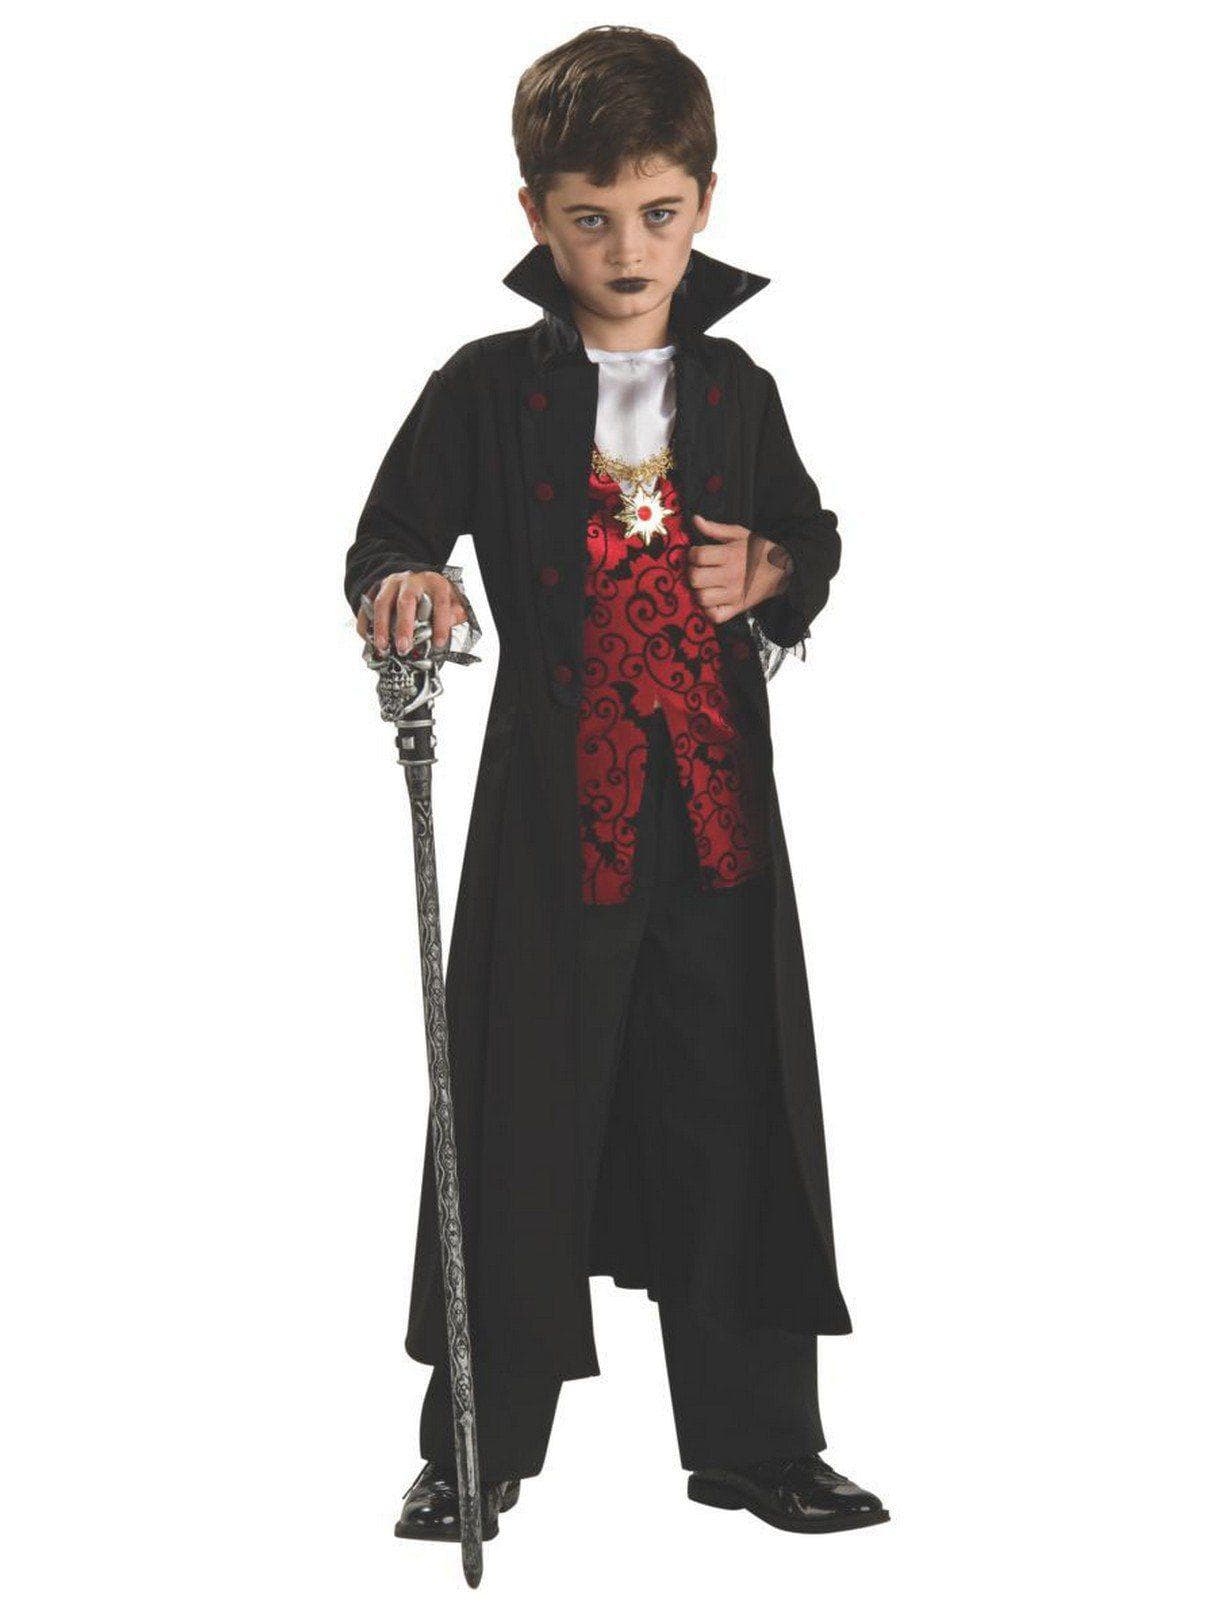 Kids Royal Vampire Costume - costumes.com